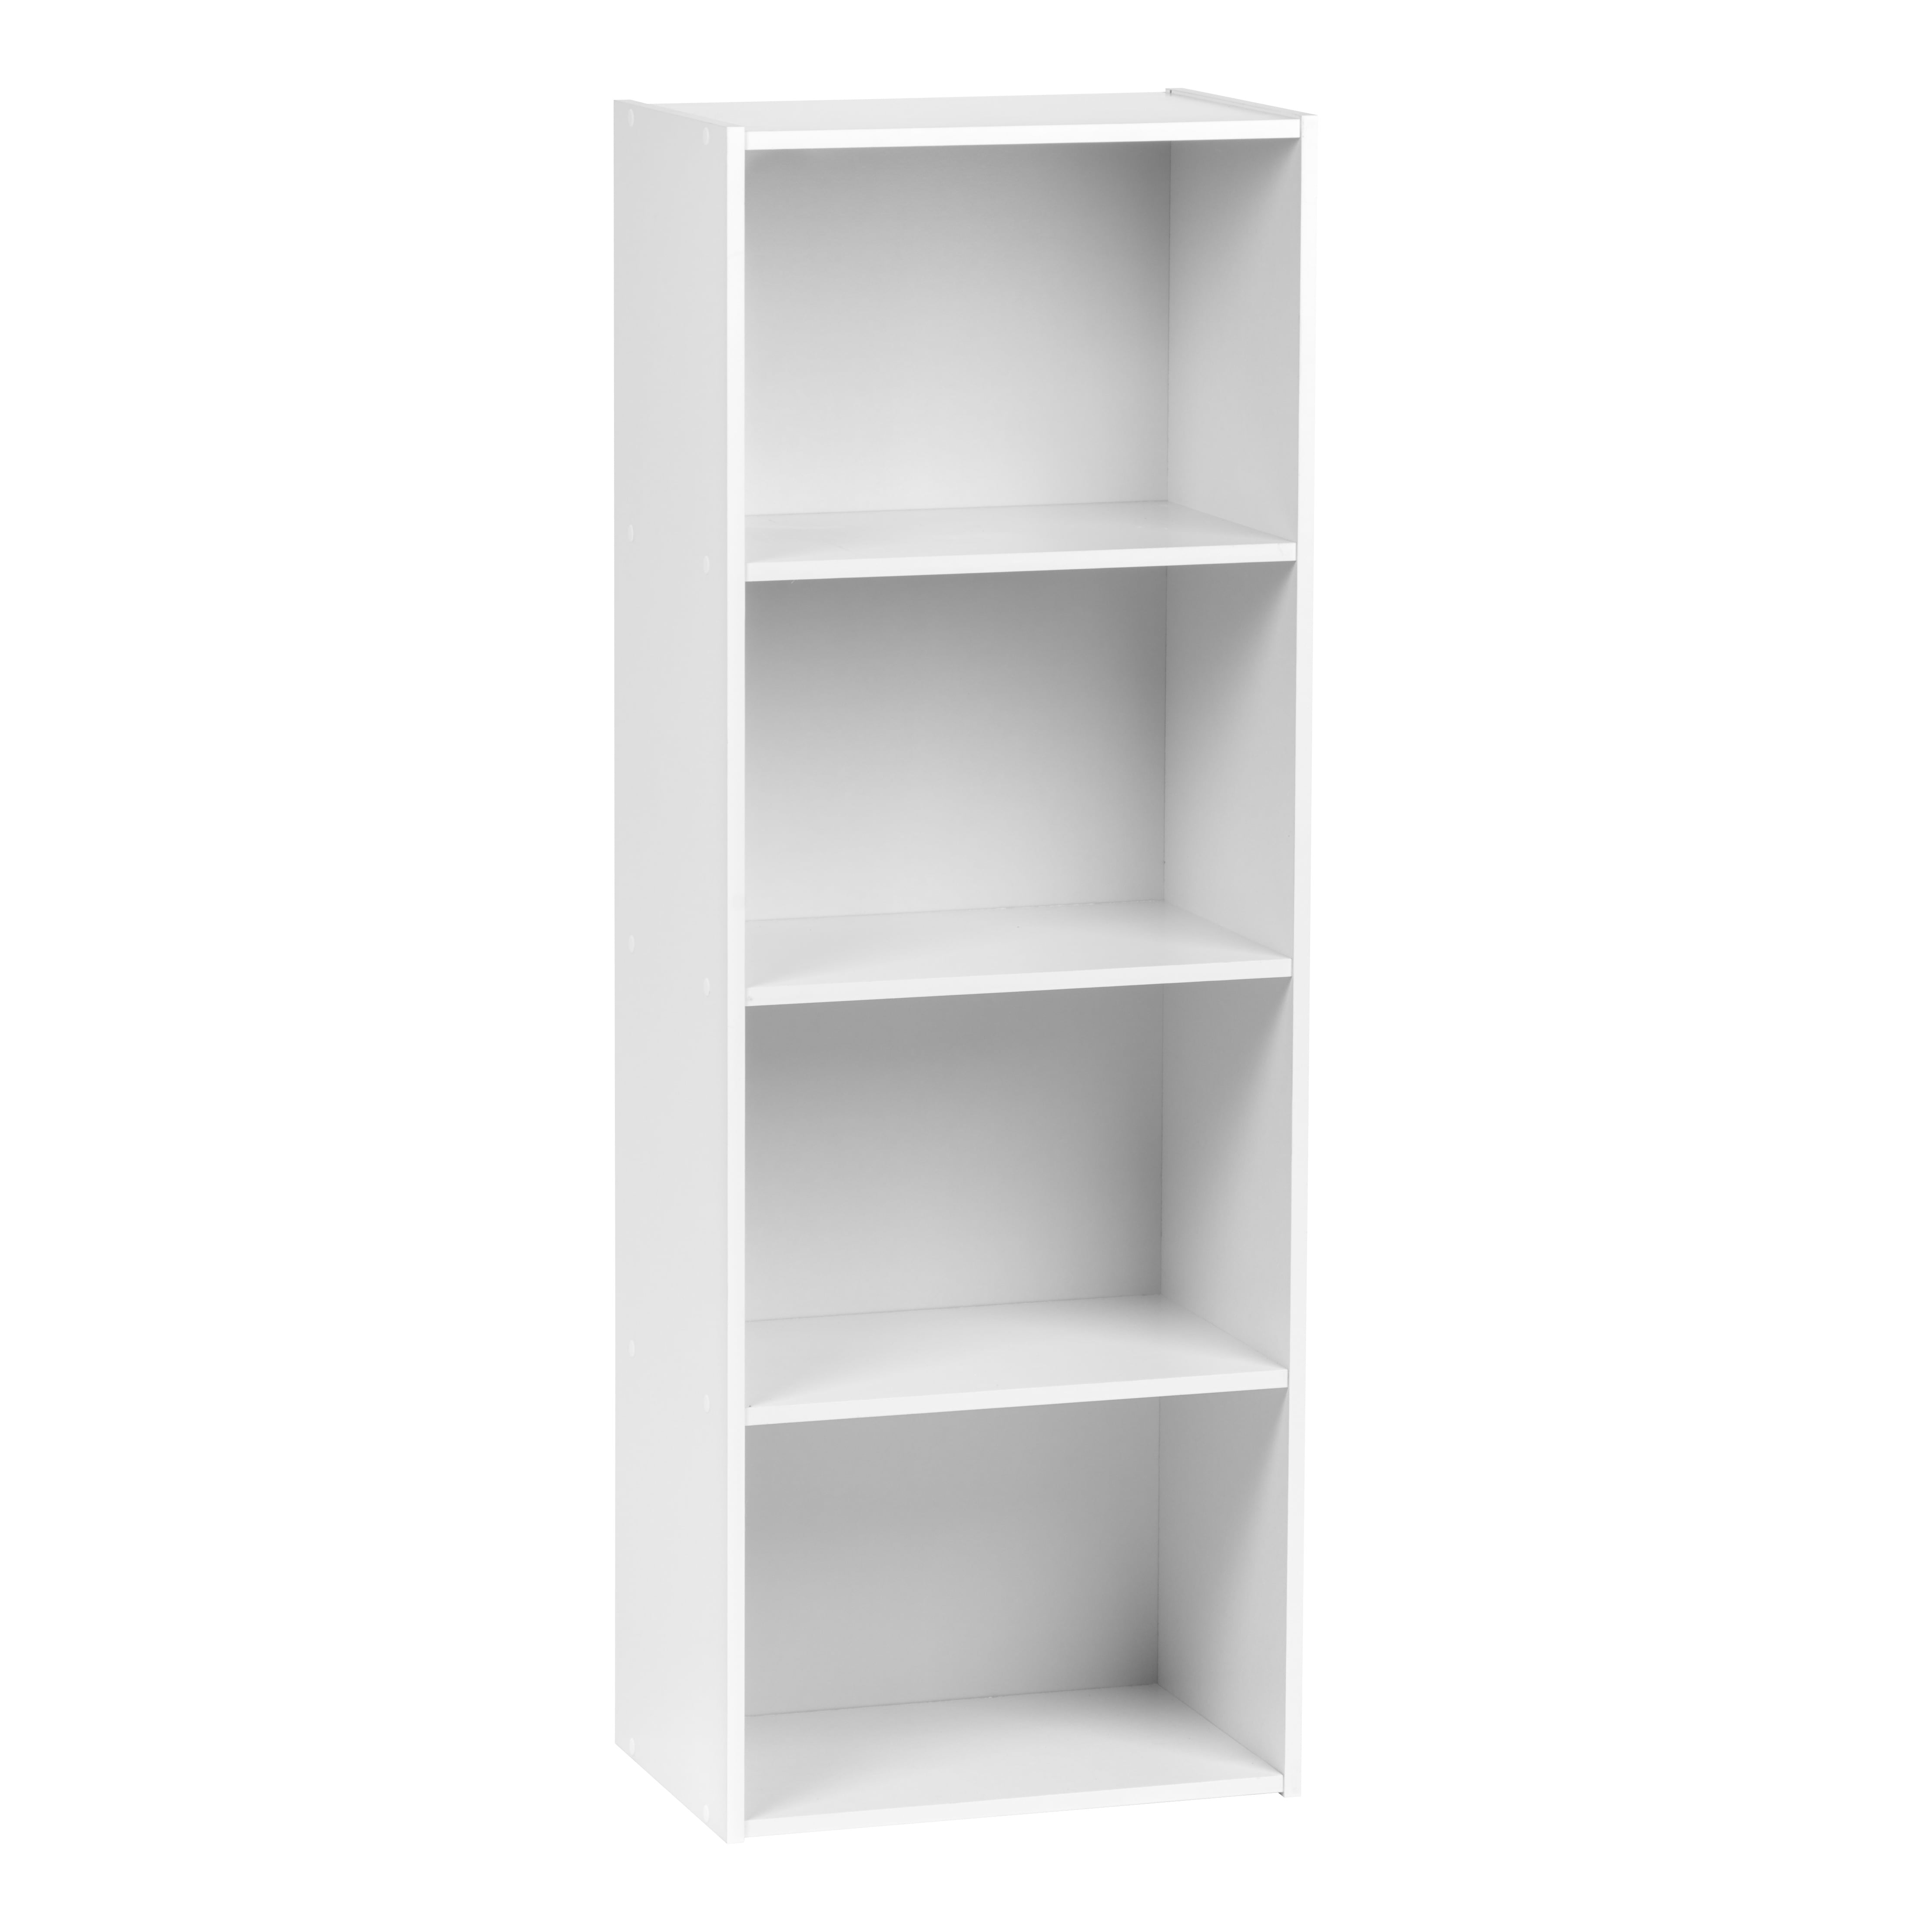 2 4 Tier Standing Shelf Shelves Storage Bookcase CD/DVD Organizer Home Office Furniture White 3 3 Tier by Salerno